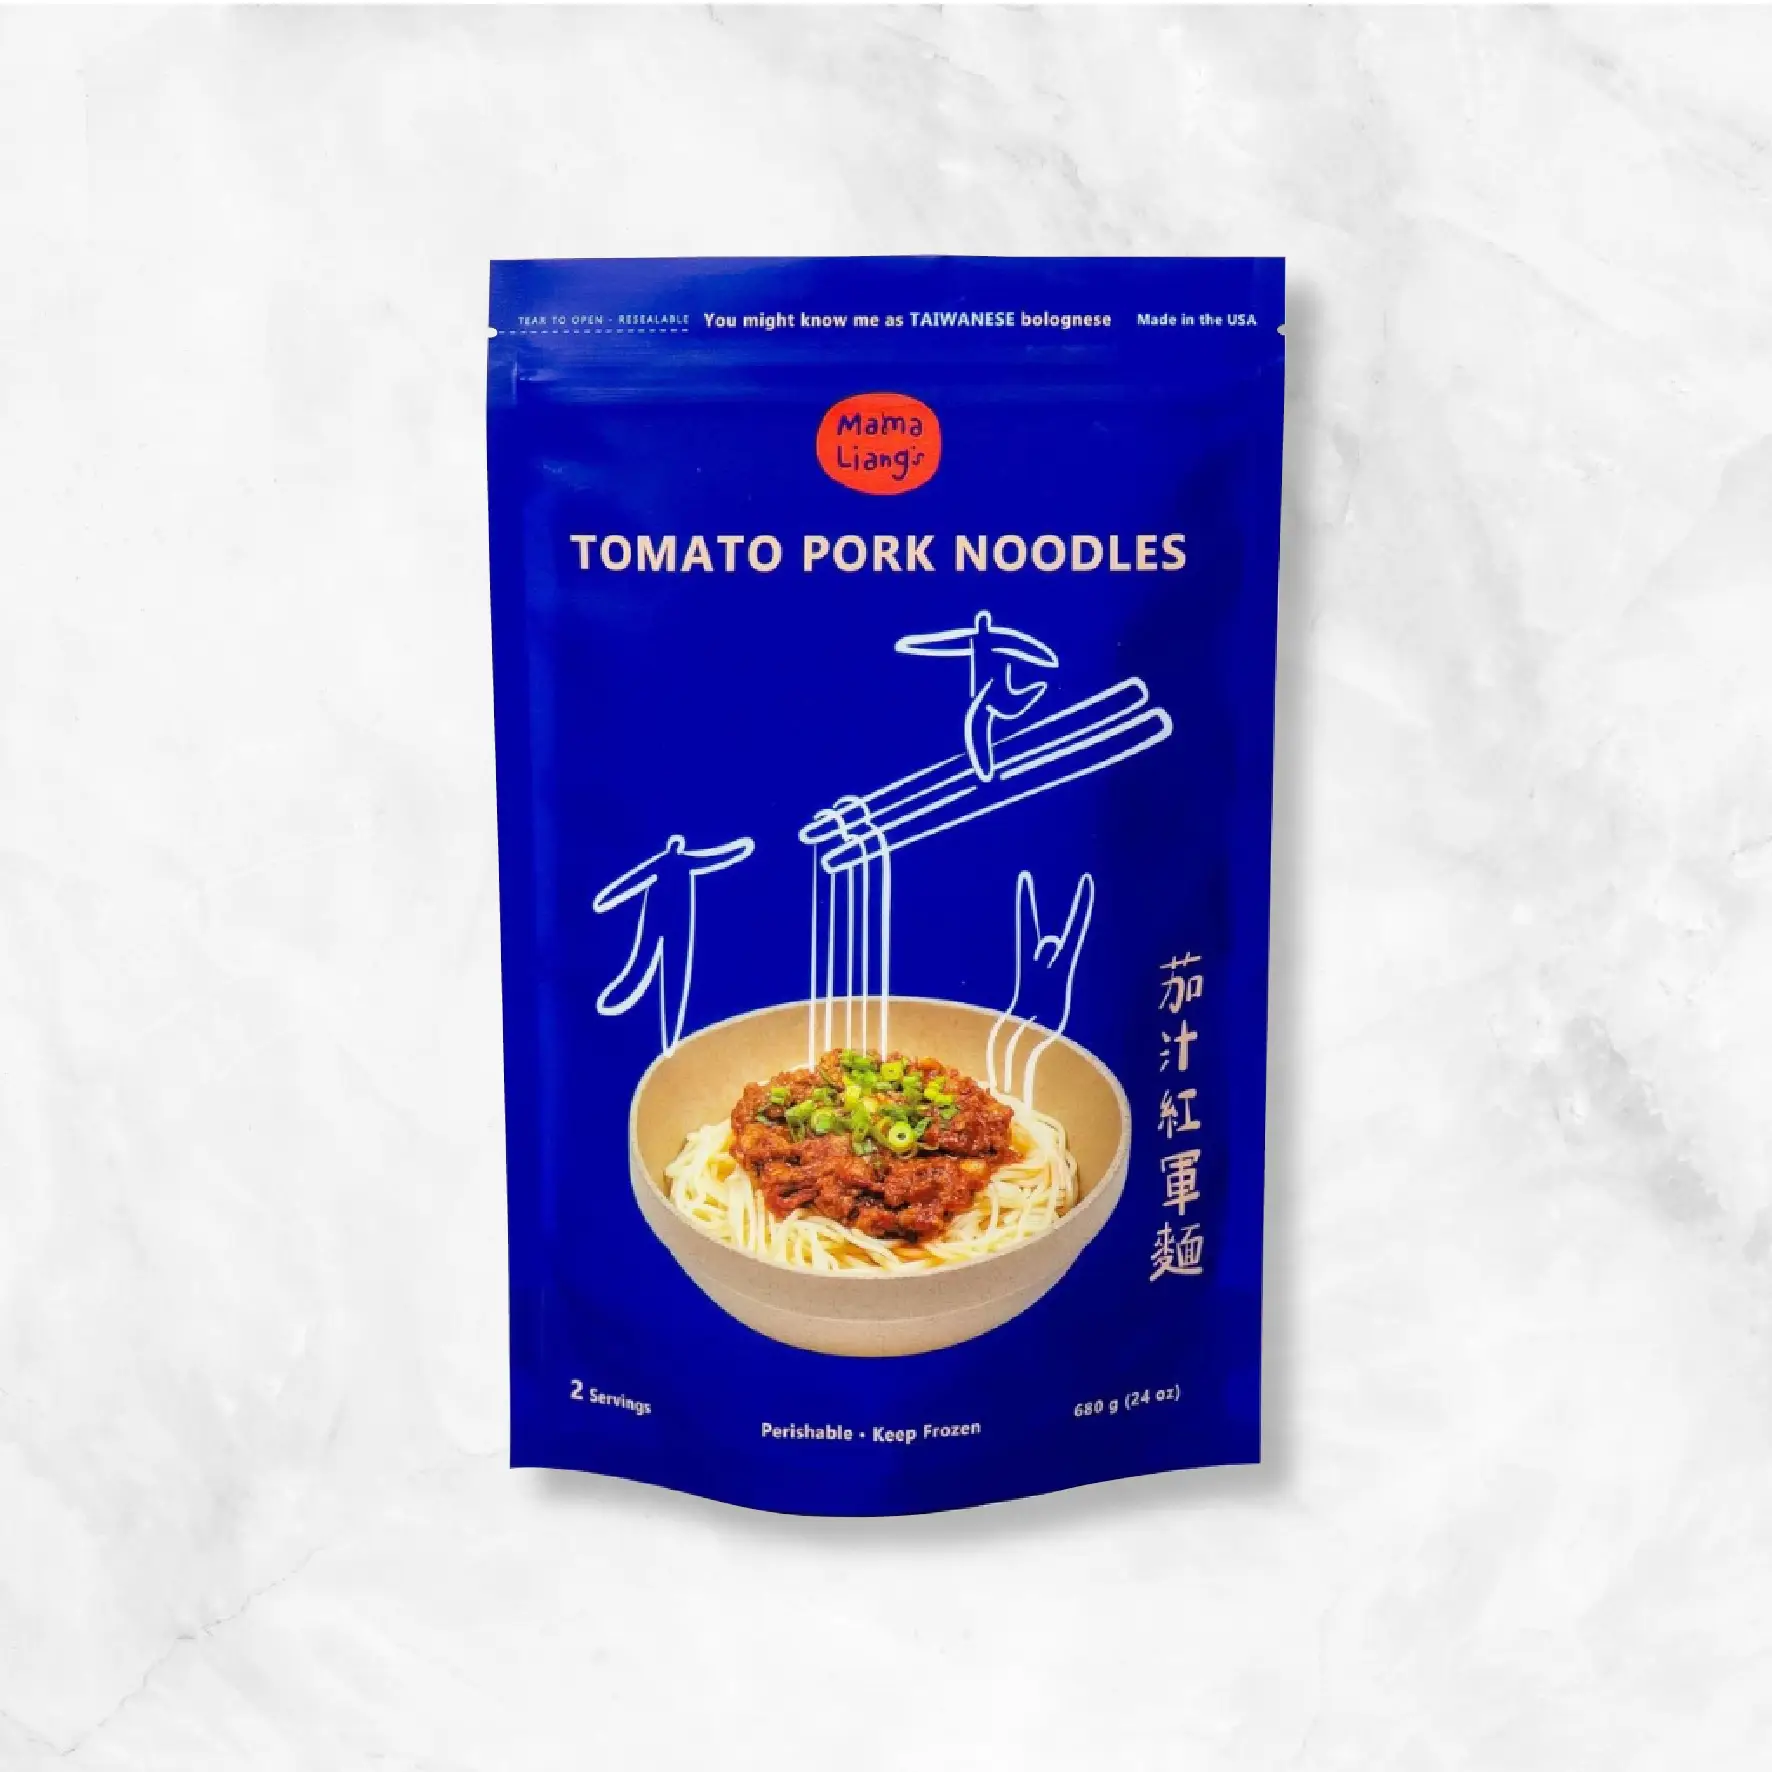 Tomato Pork Noodles